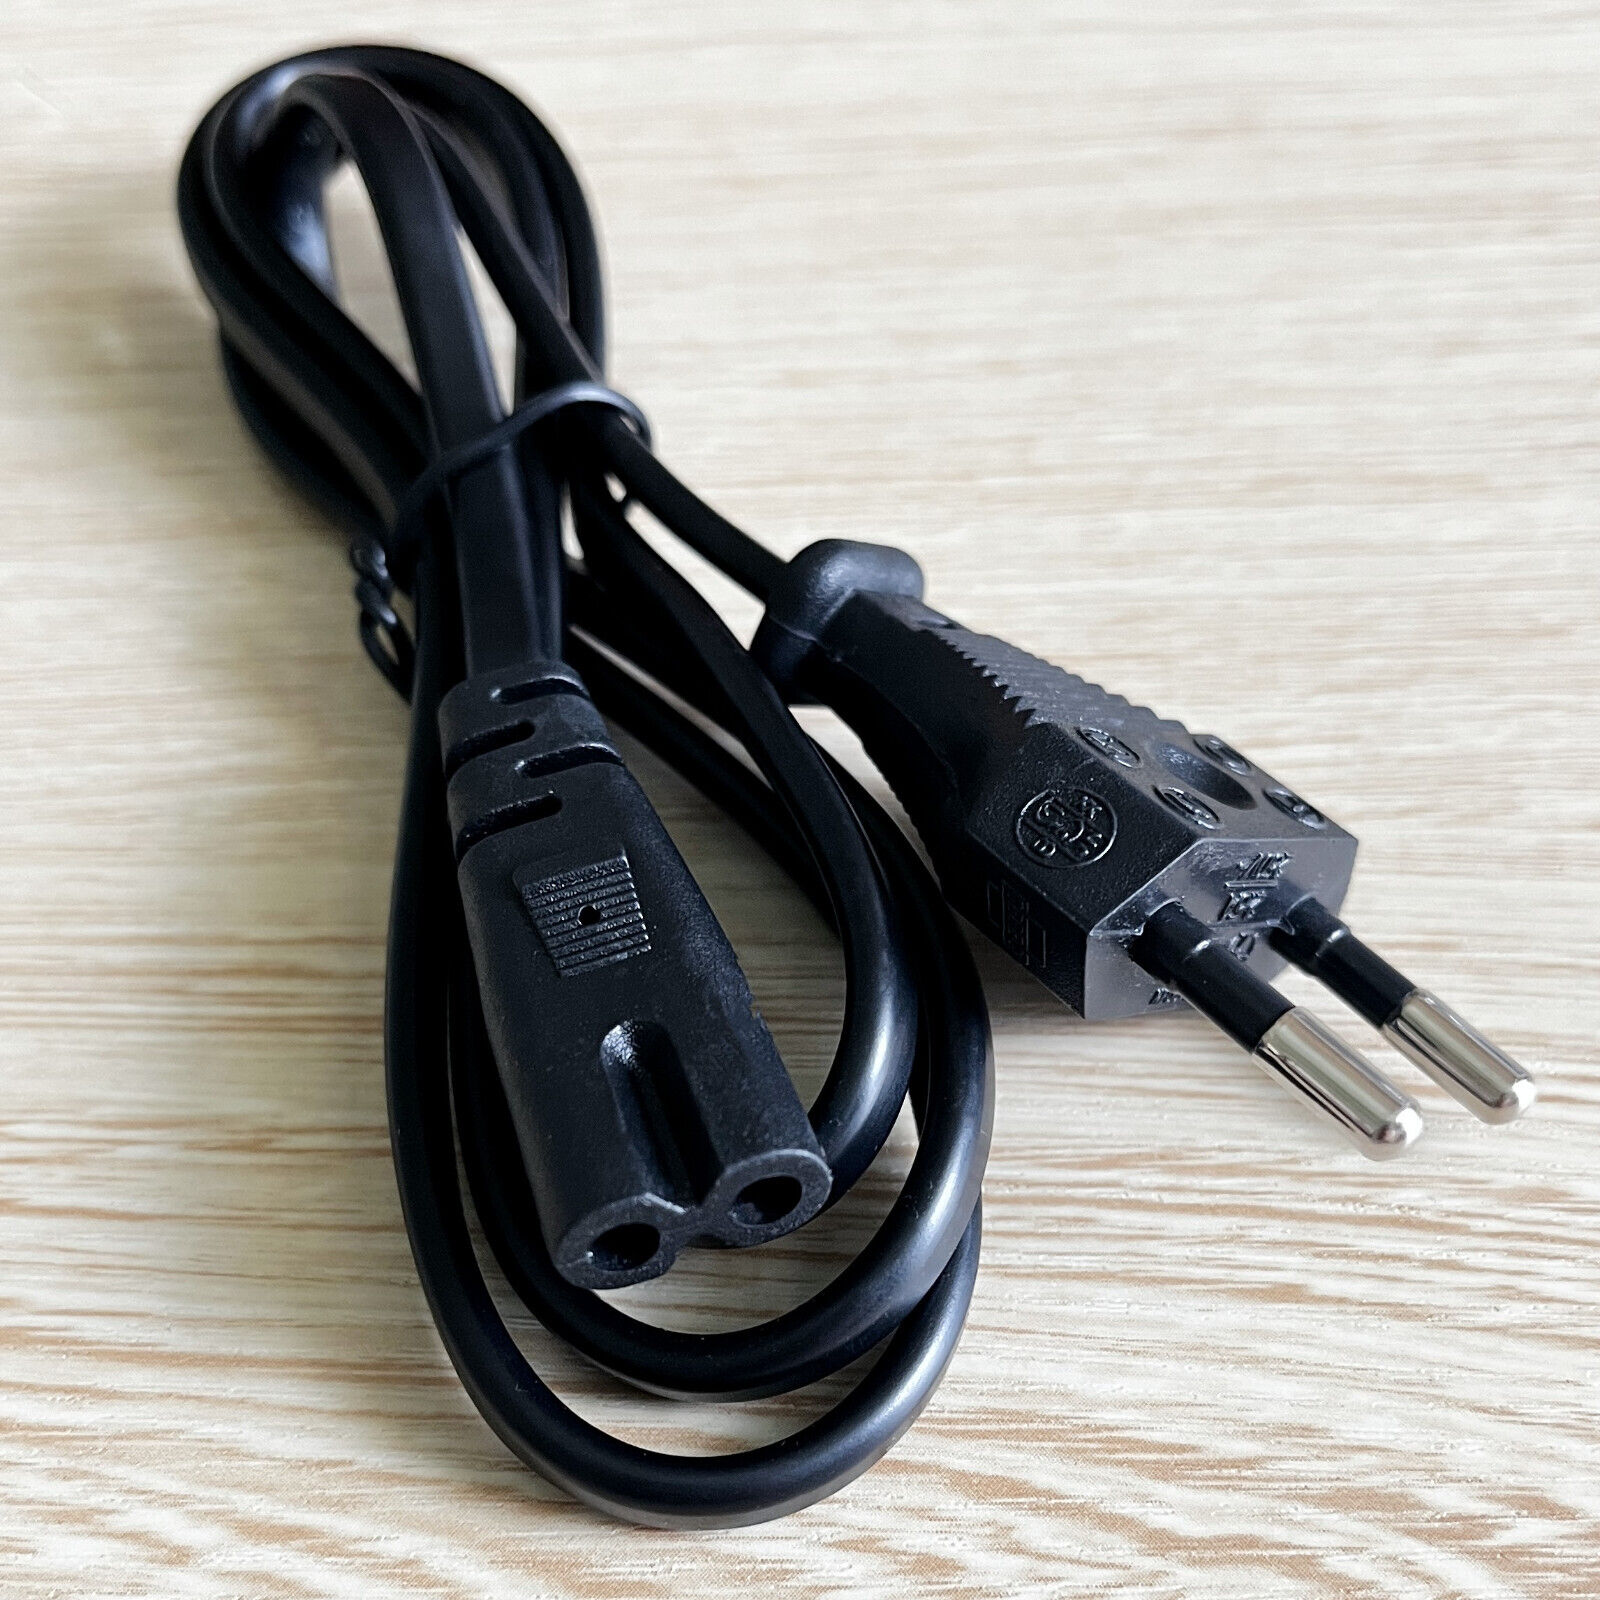 2.5A 250V~AC Power Cord Cable 2 prong EU plug RVV-2P for charger adaptor Printer